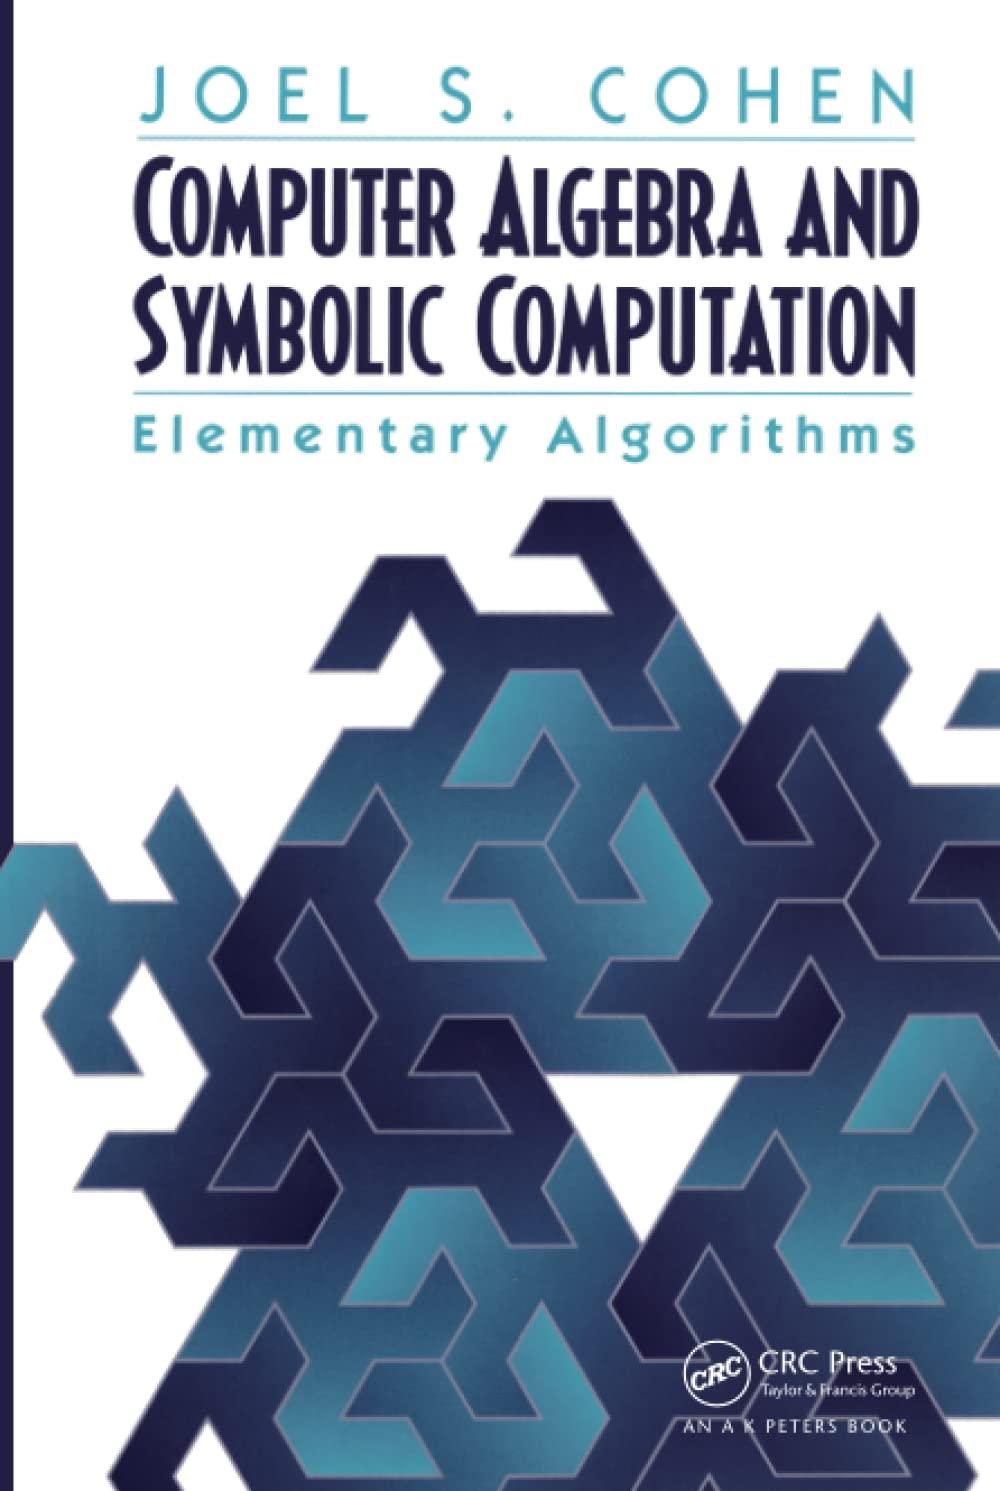 computer algebra and symbolic computation elementary algorithms 1st edition joel s. cohen 1568811586,